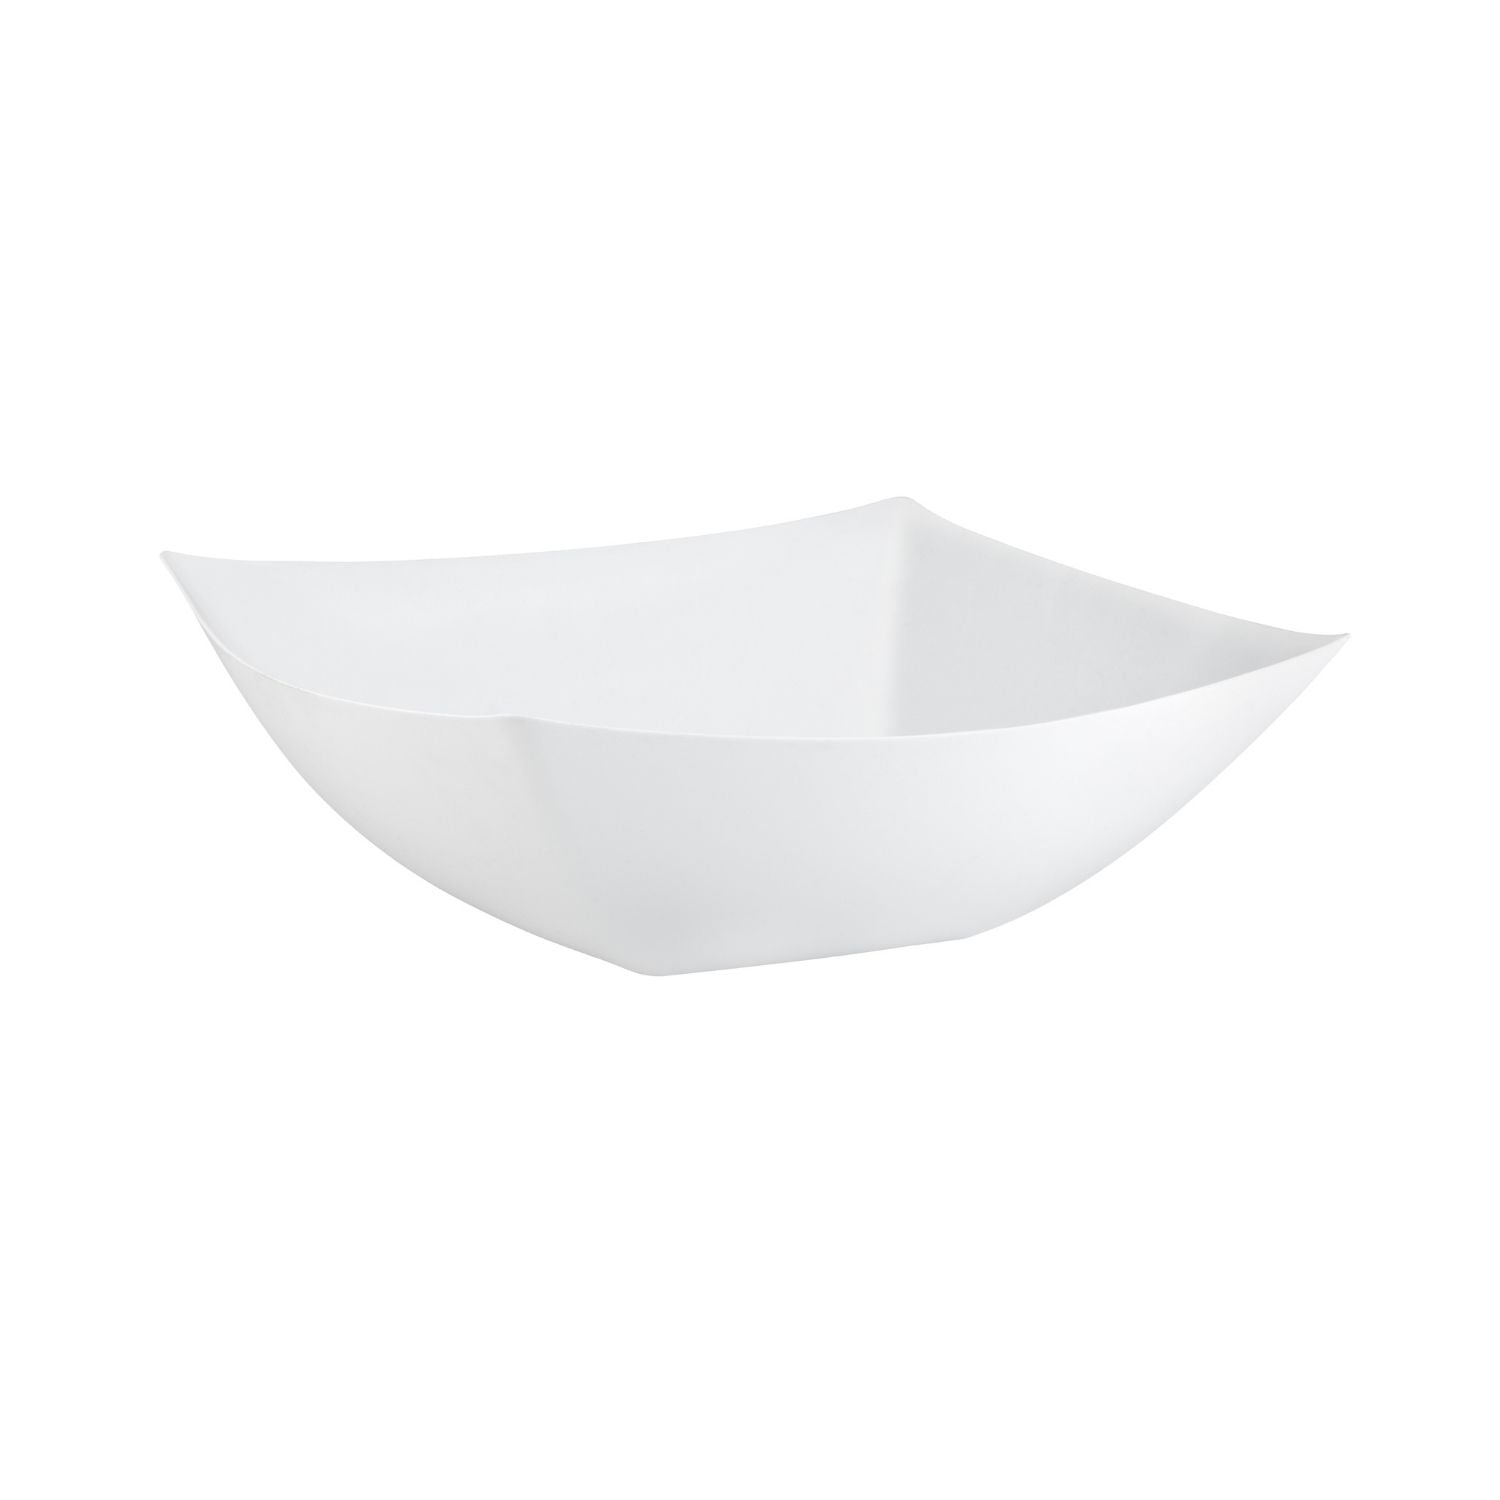 64 Oz. | White Square Plastic Serving Bowl | 36 Count - Yom Tov Settings